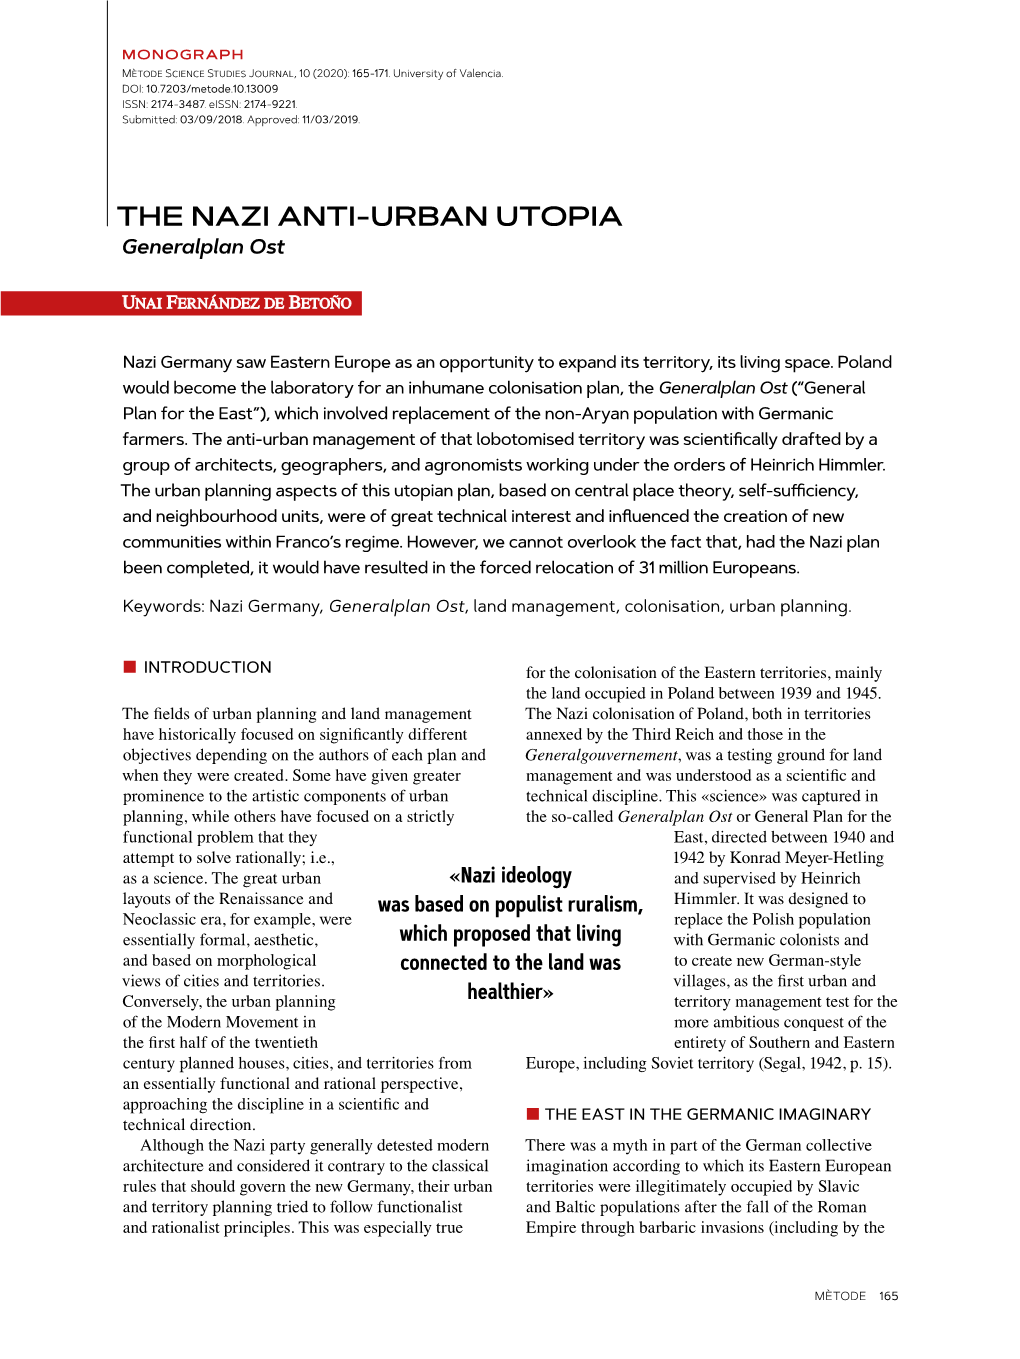 THE NAZI ANTI-URBAN UTOPIA Generalplan Ost